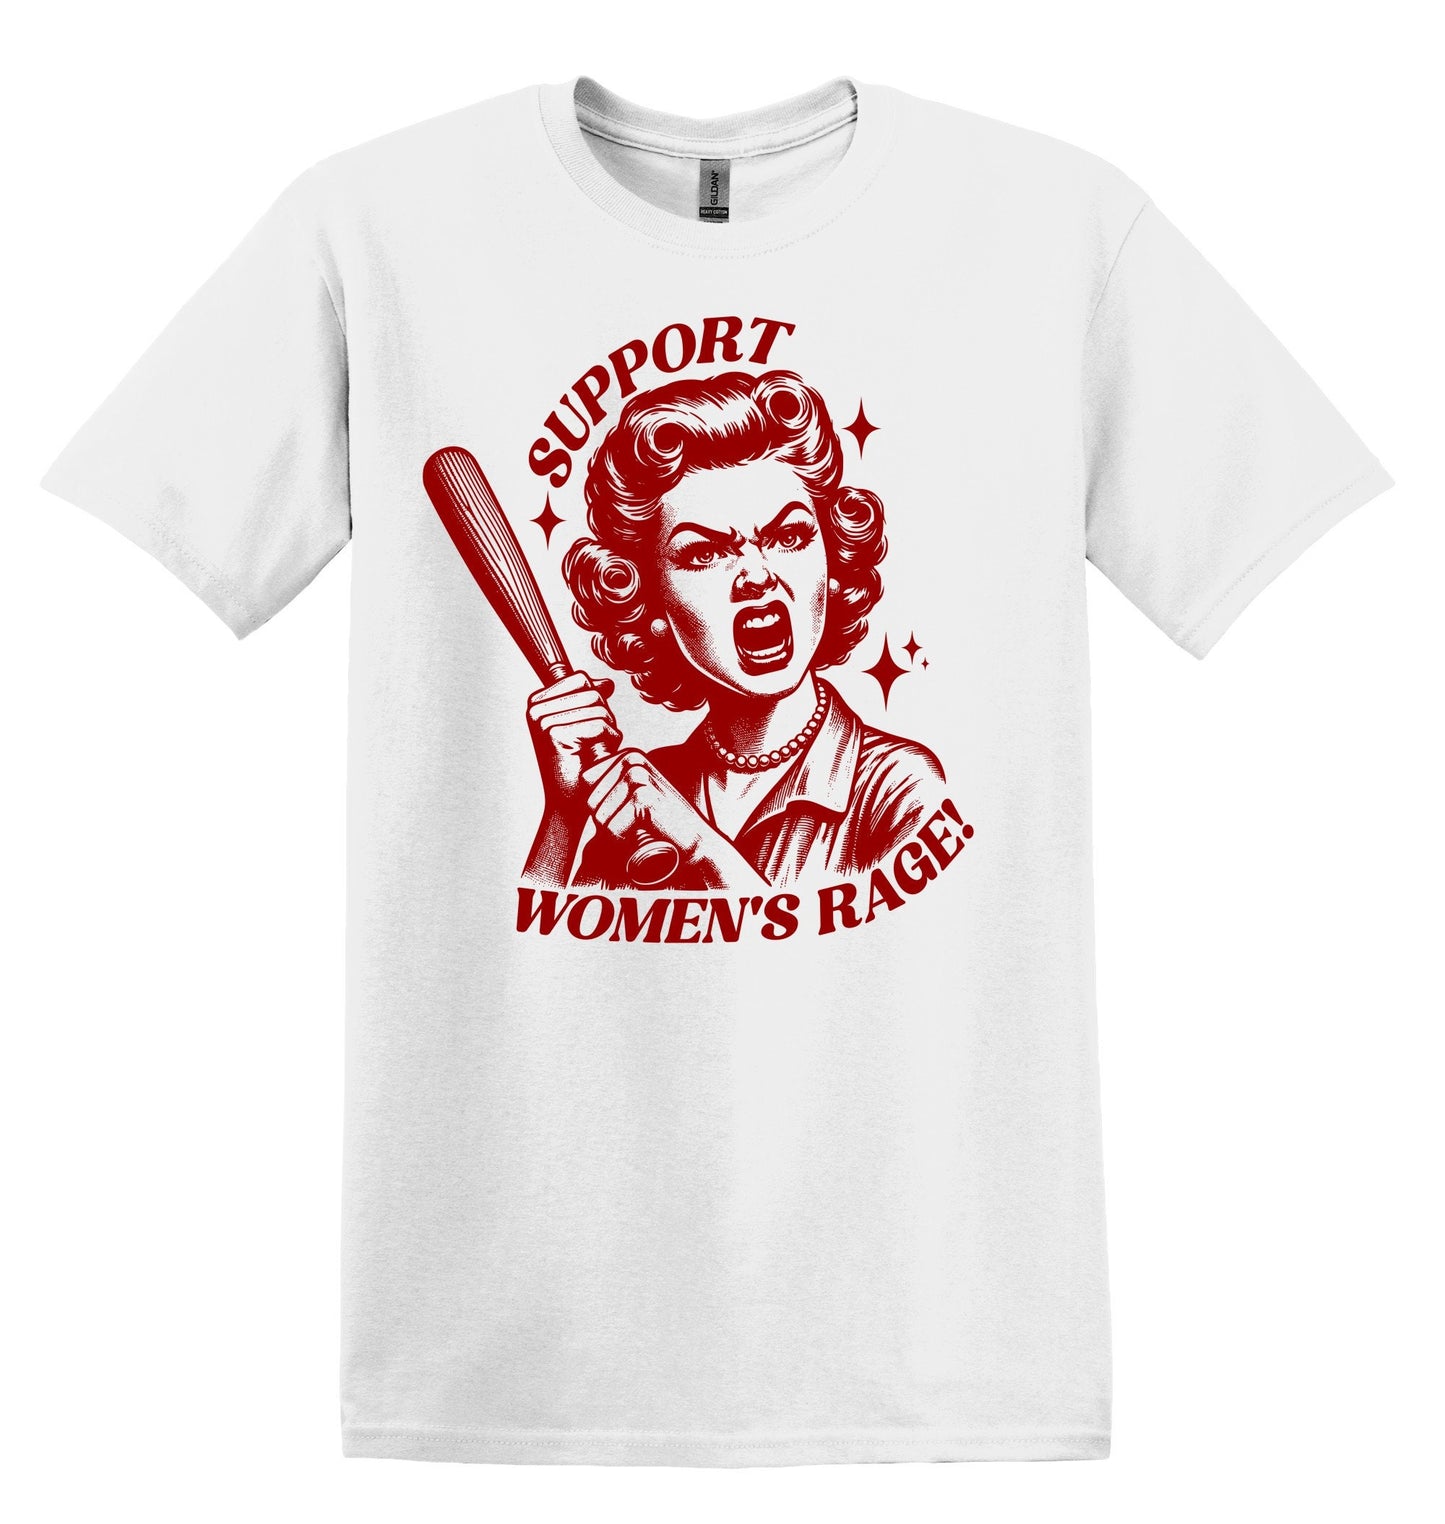 Support Women's Rage Shirt Graphic Shirt Retro Adult Shirt Vintage Shirt Nostalgia Relaxed Cotton Tee Meme Shirt Funny Gift Trendy Shirt